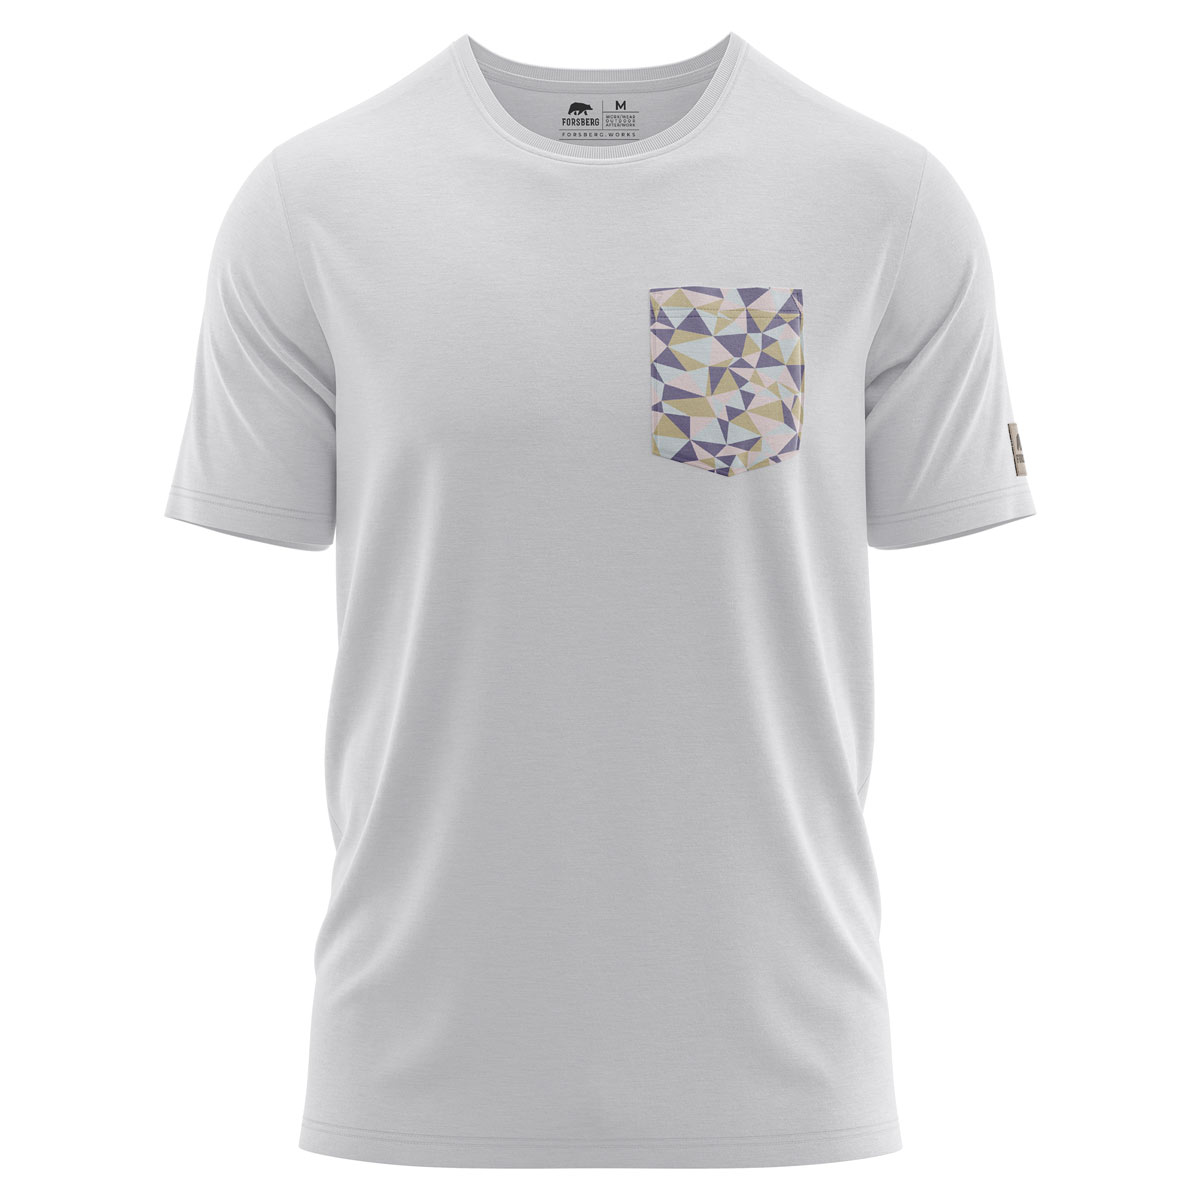 FORSBERG T-shirt with chest pocket in polygonal design white, petrol ...